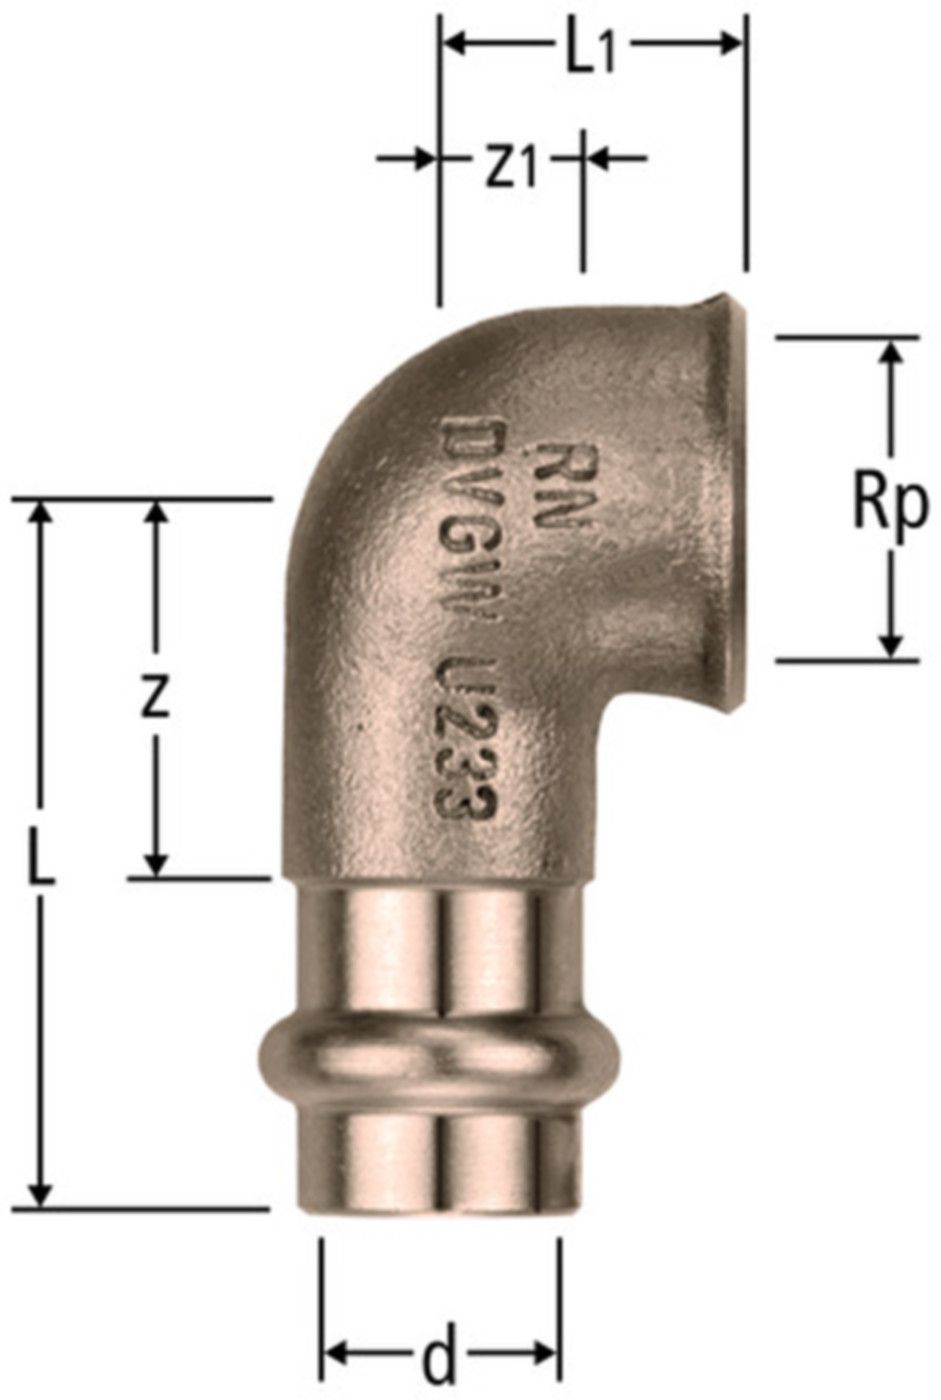 Winkel mit IG 15 x 1/2" 81006.22 - Nussbaum-Optipress-Rotguss-Fittings